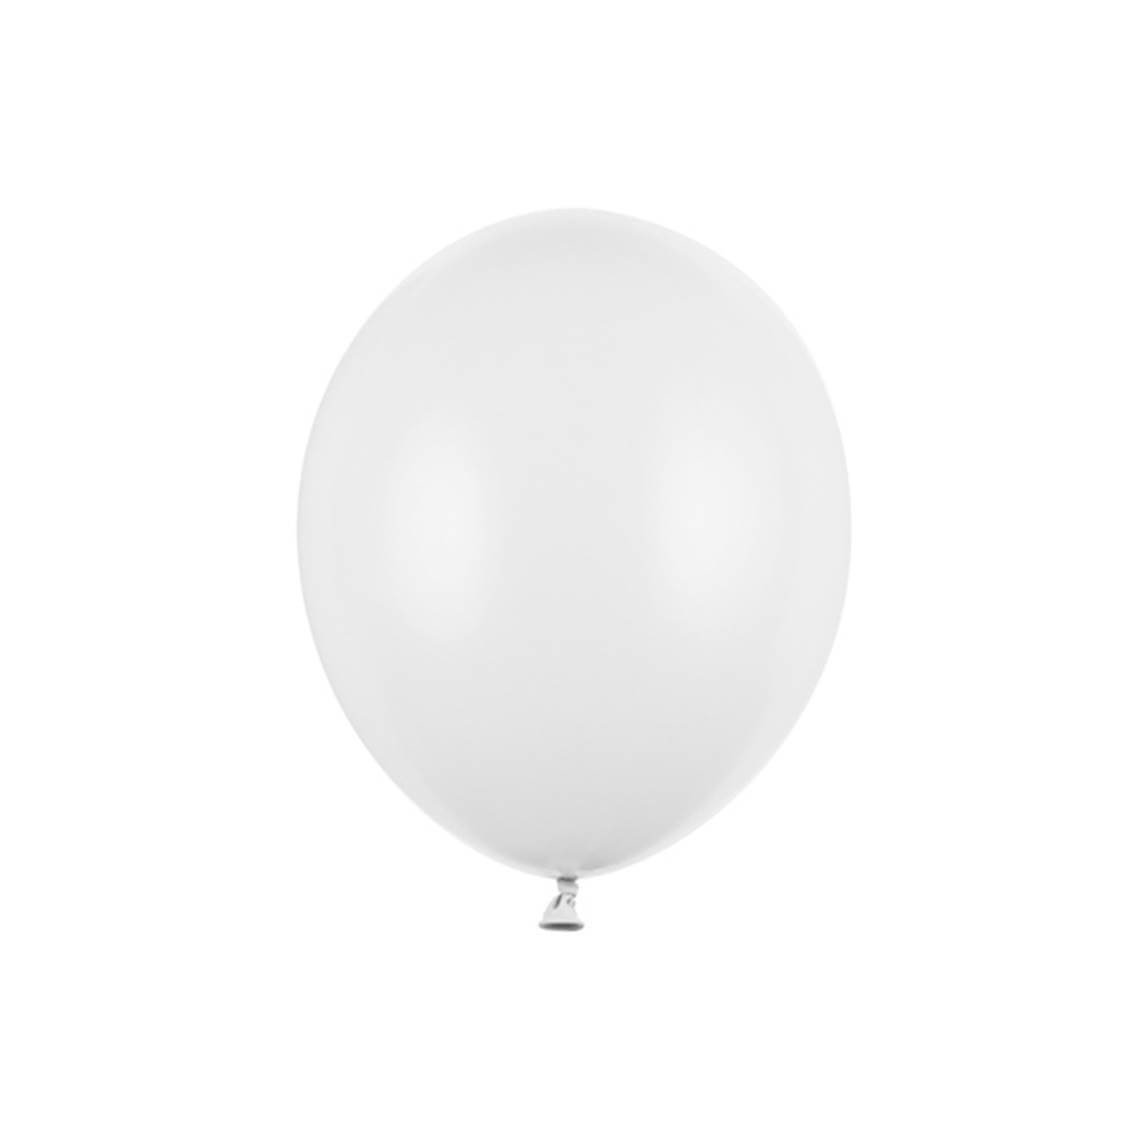 Gemar Nafukovací balónky BÍLÉ 10ks